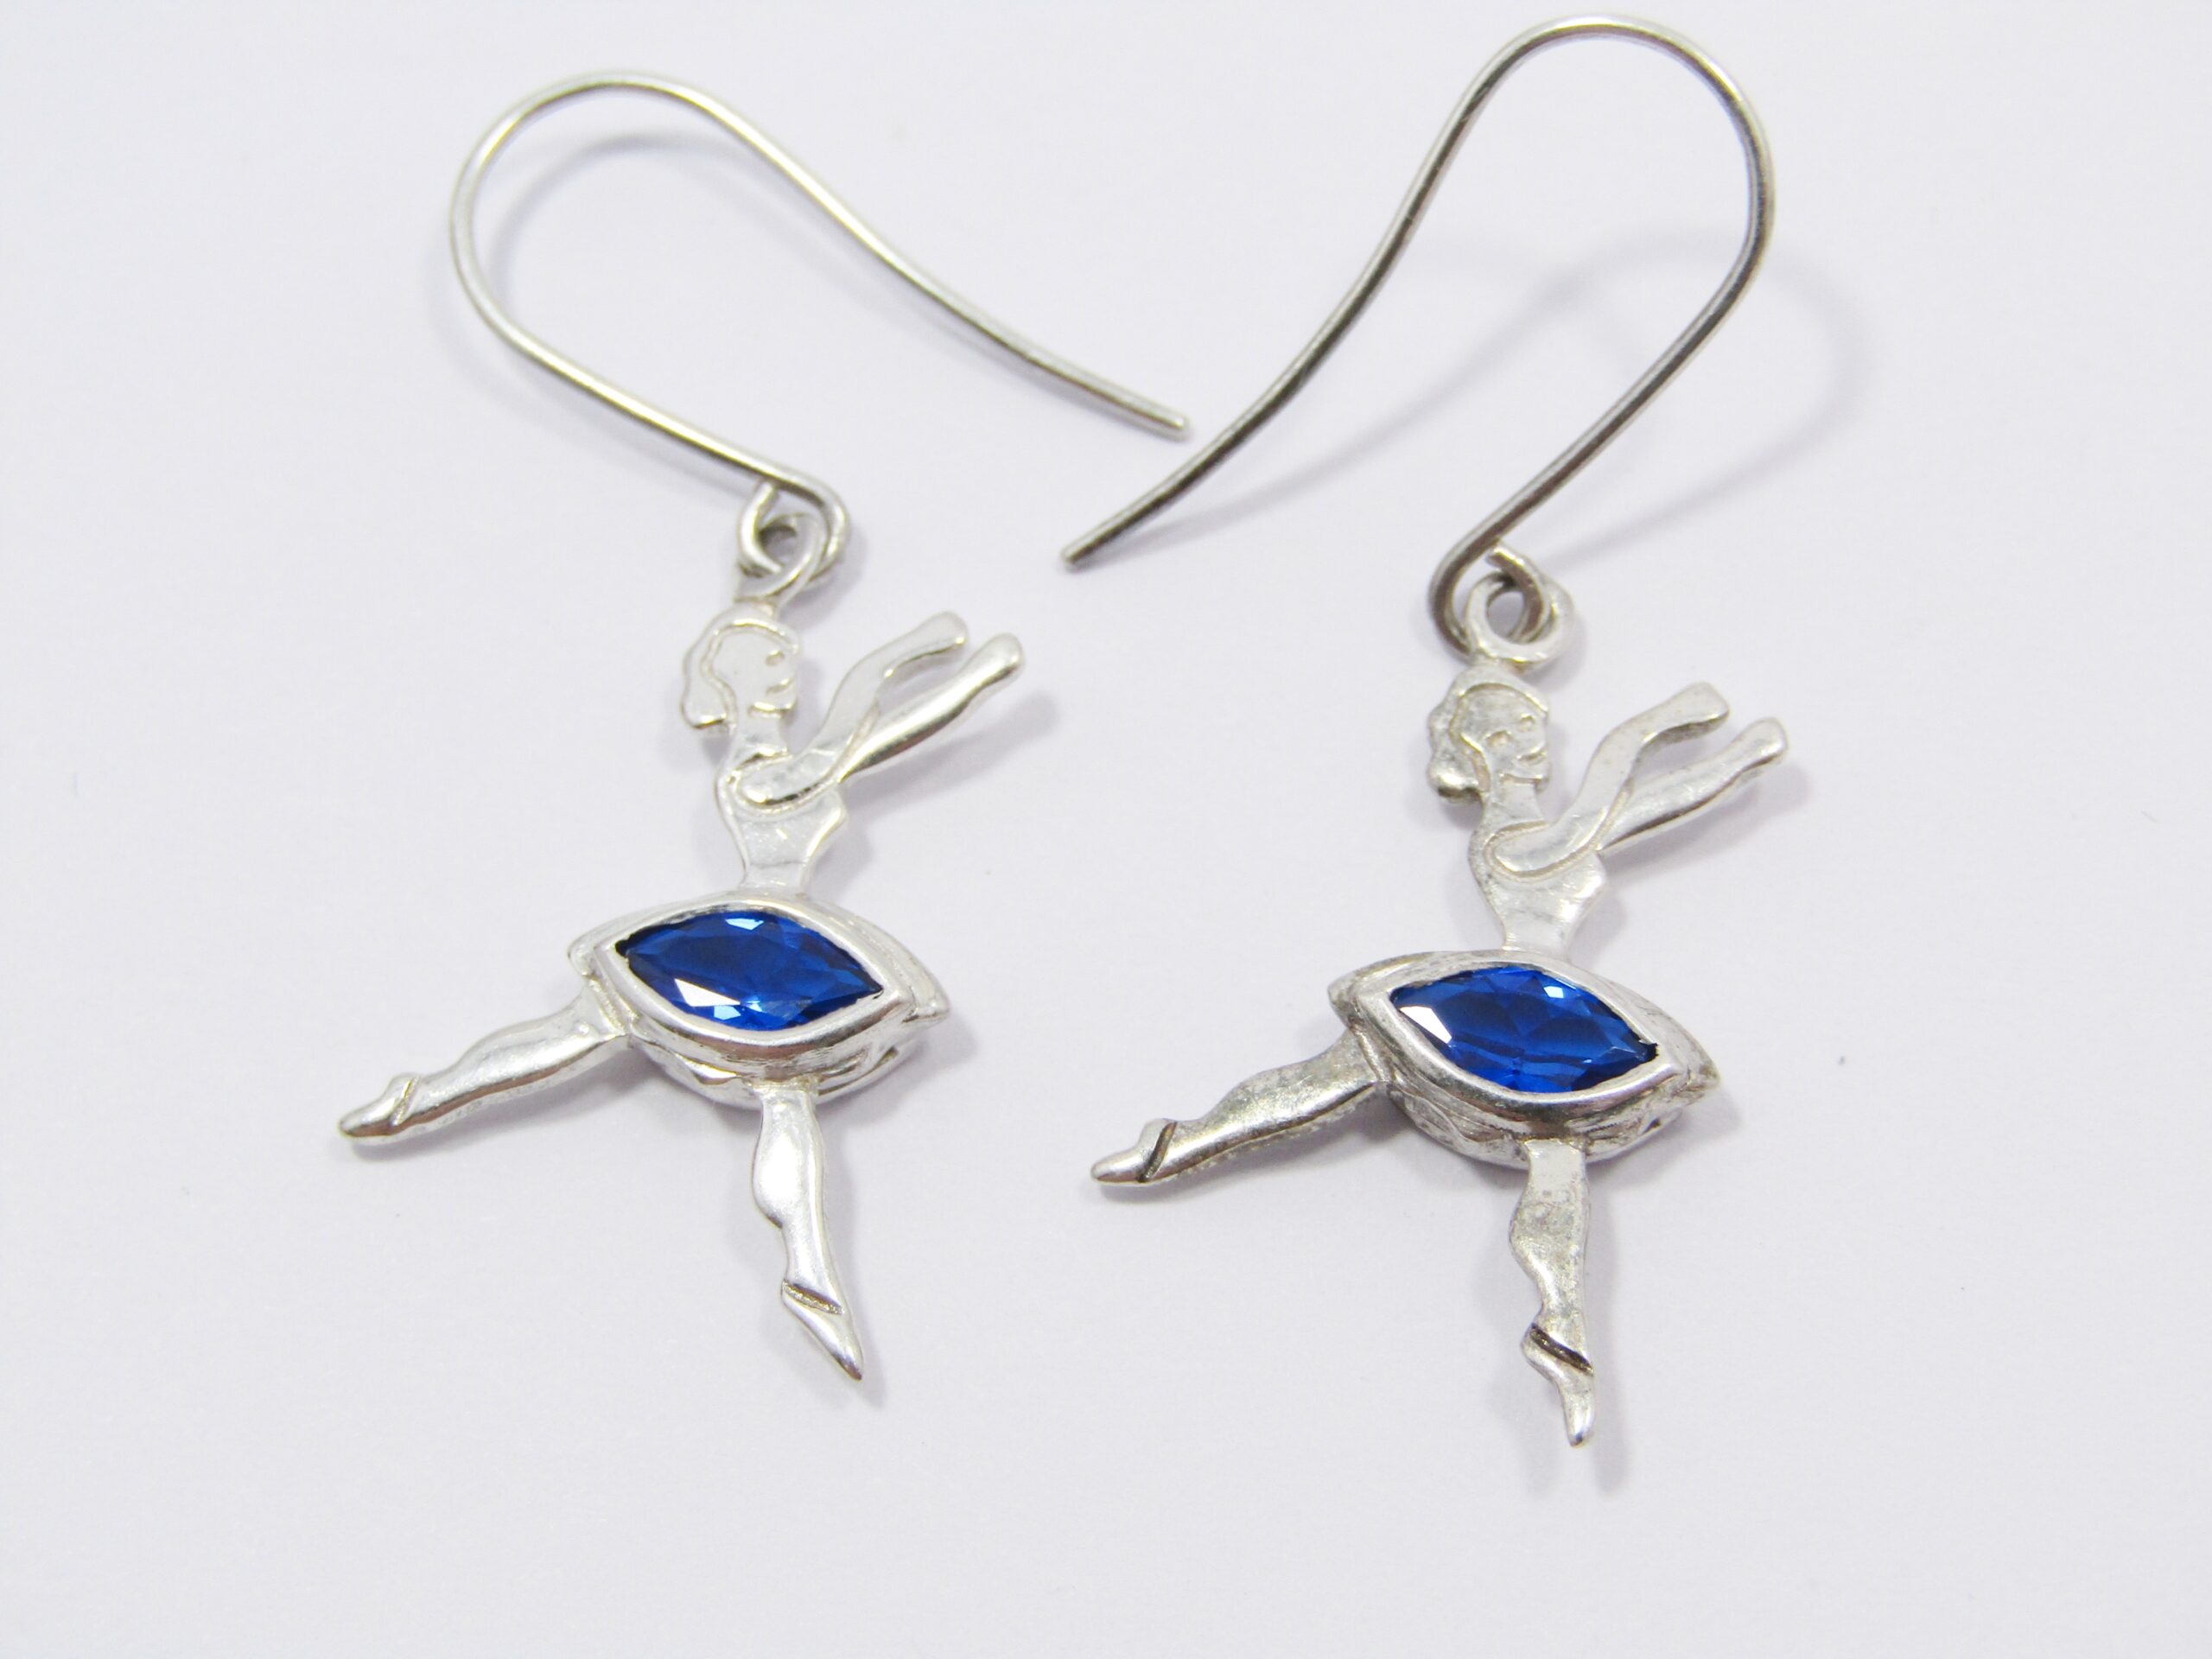 A Lovely Pair of Blue Zirconia Ballerina Earrings in Sterling Silver